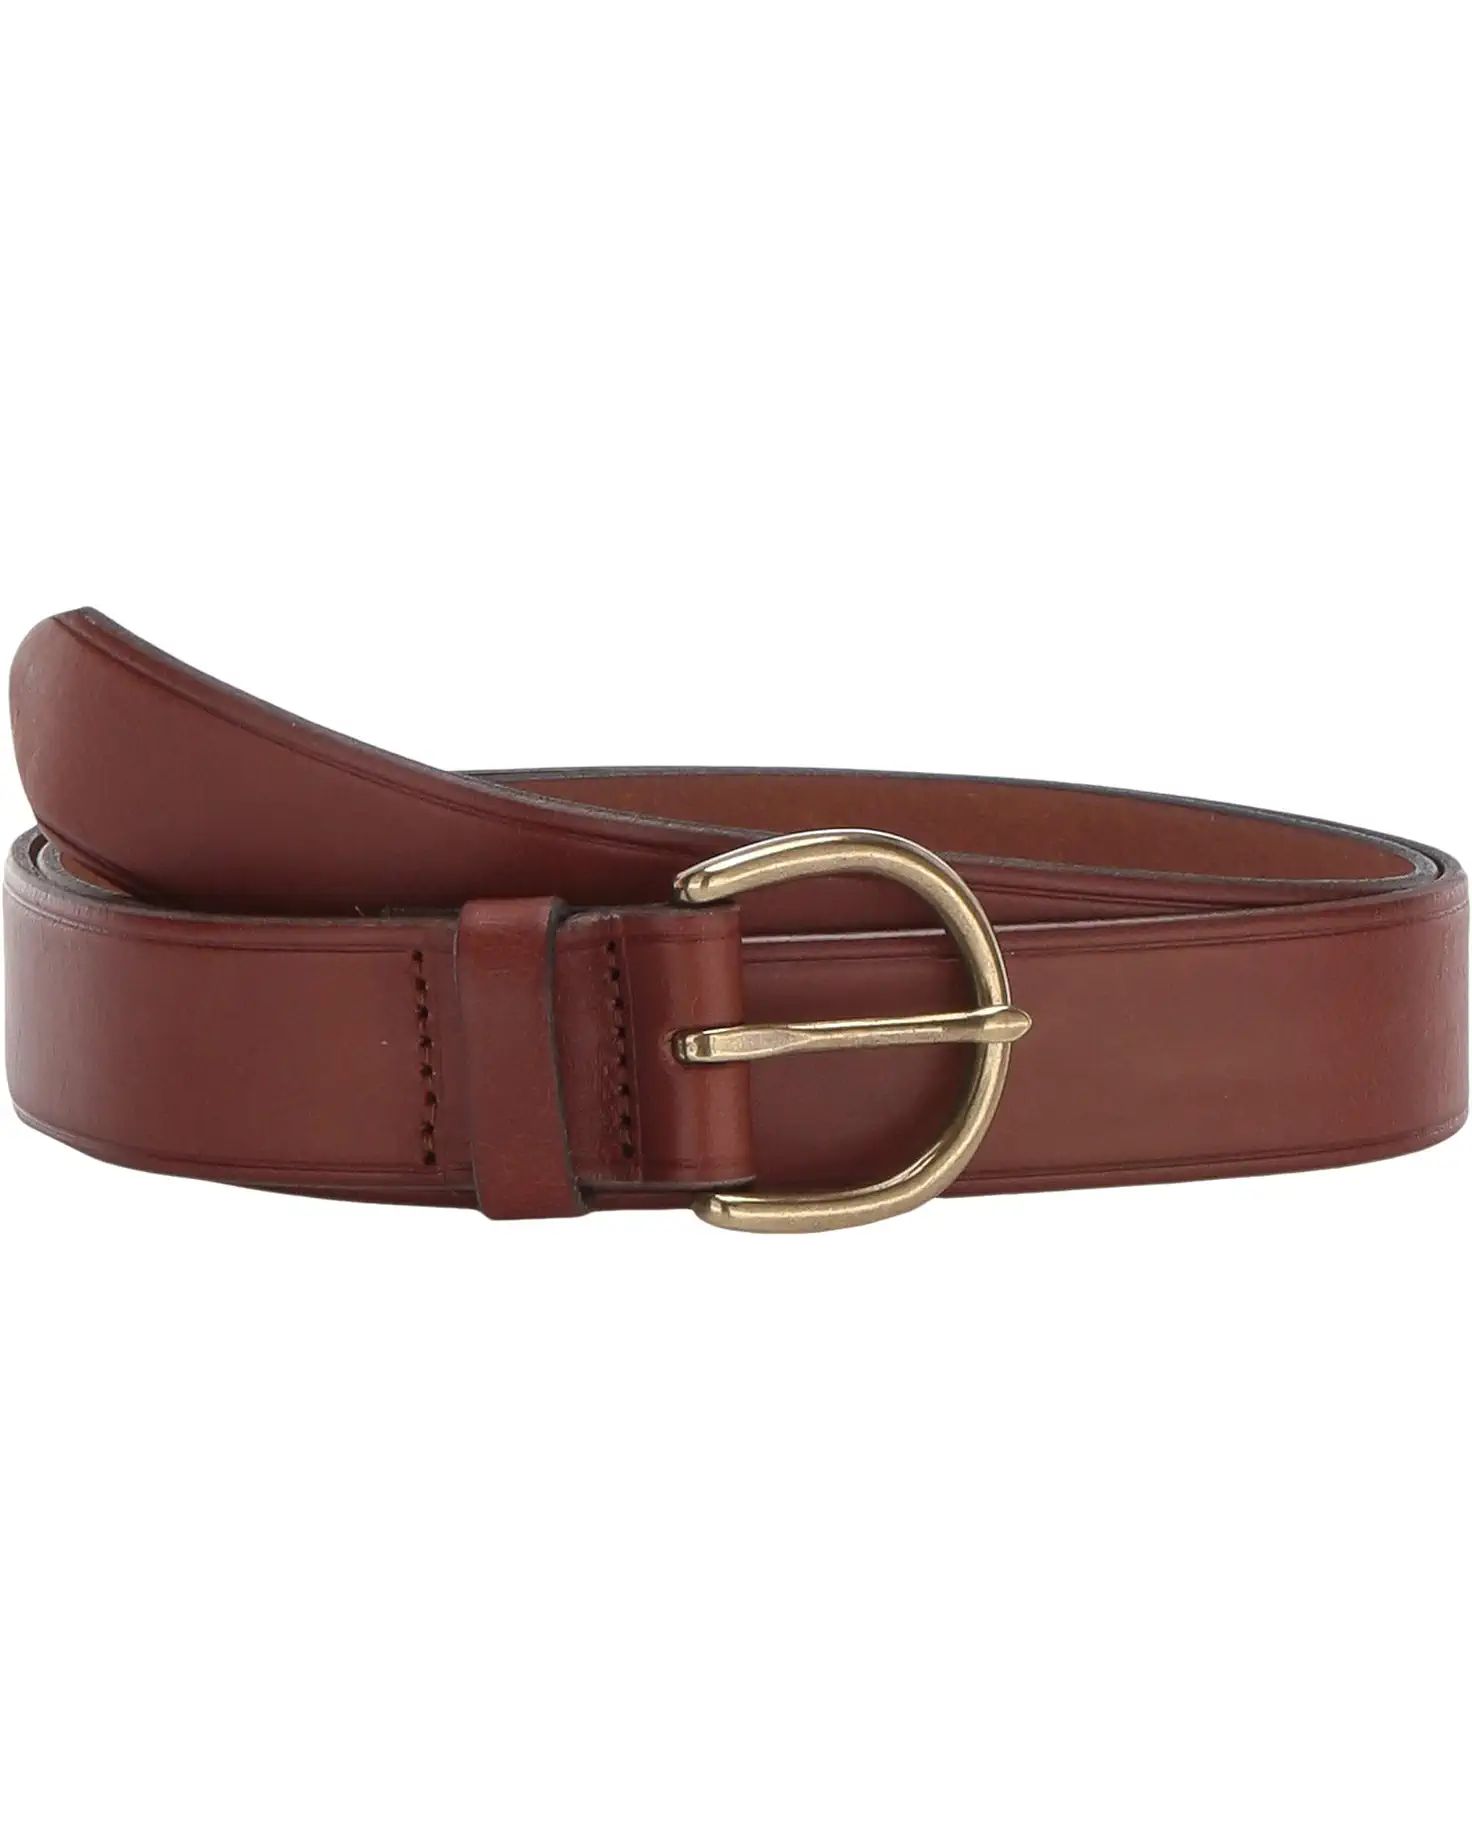 Madewell Medium Perfect Leather Belt | Zappos